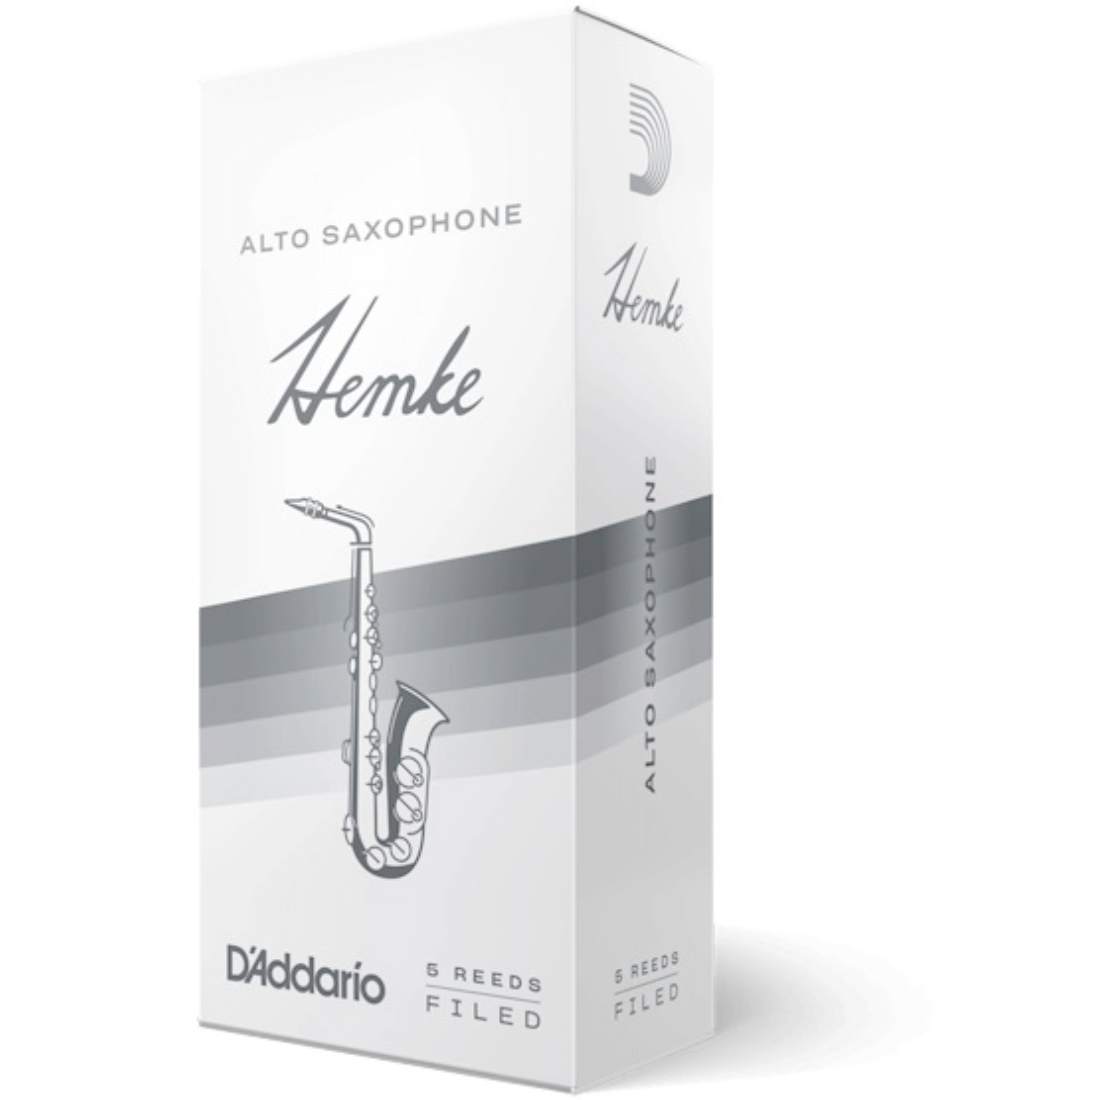 White and grey box of 5 Hemke alto saxophone reeds - strength of 2.5